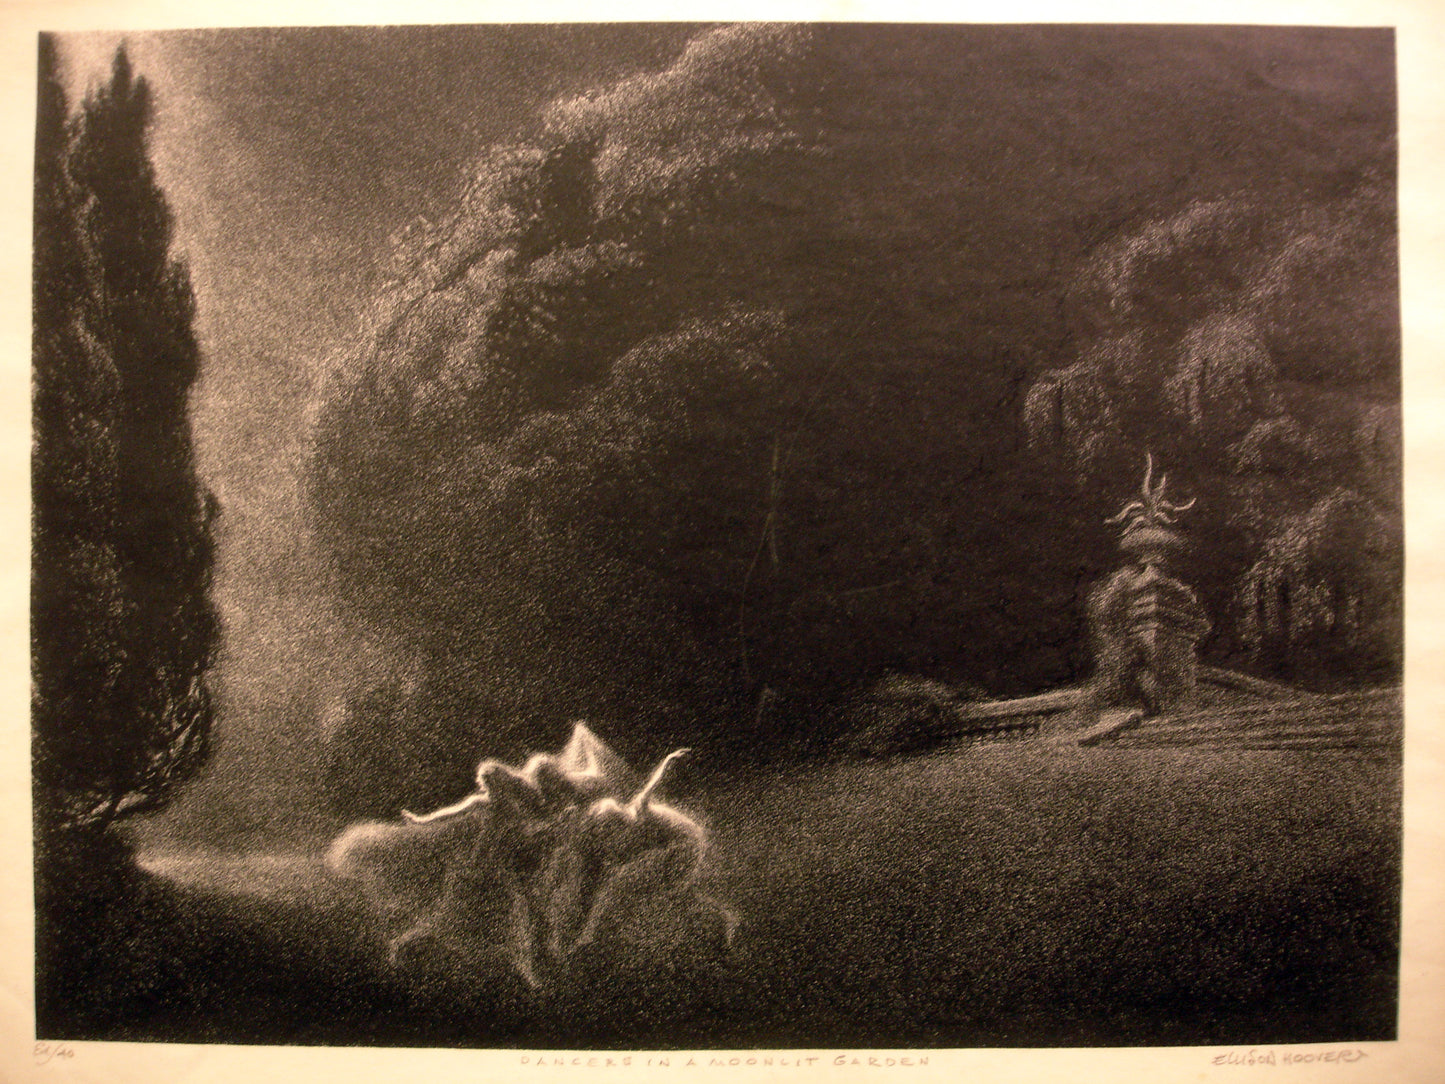 "Dancer in a Moonlit Garden" by Ellison Hoover